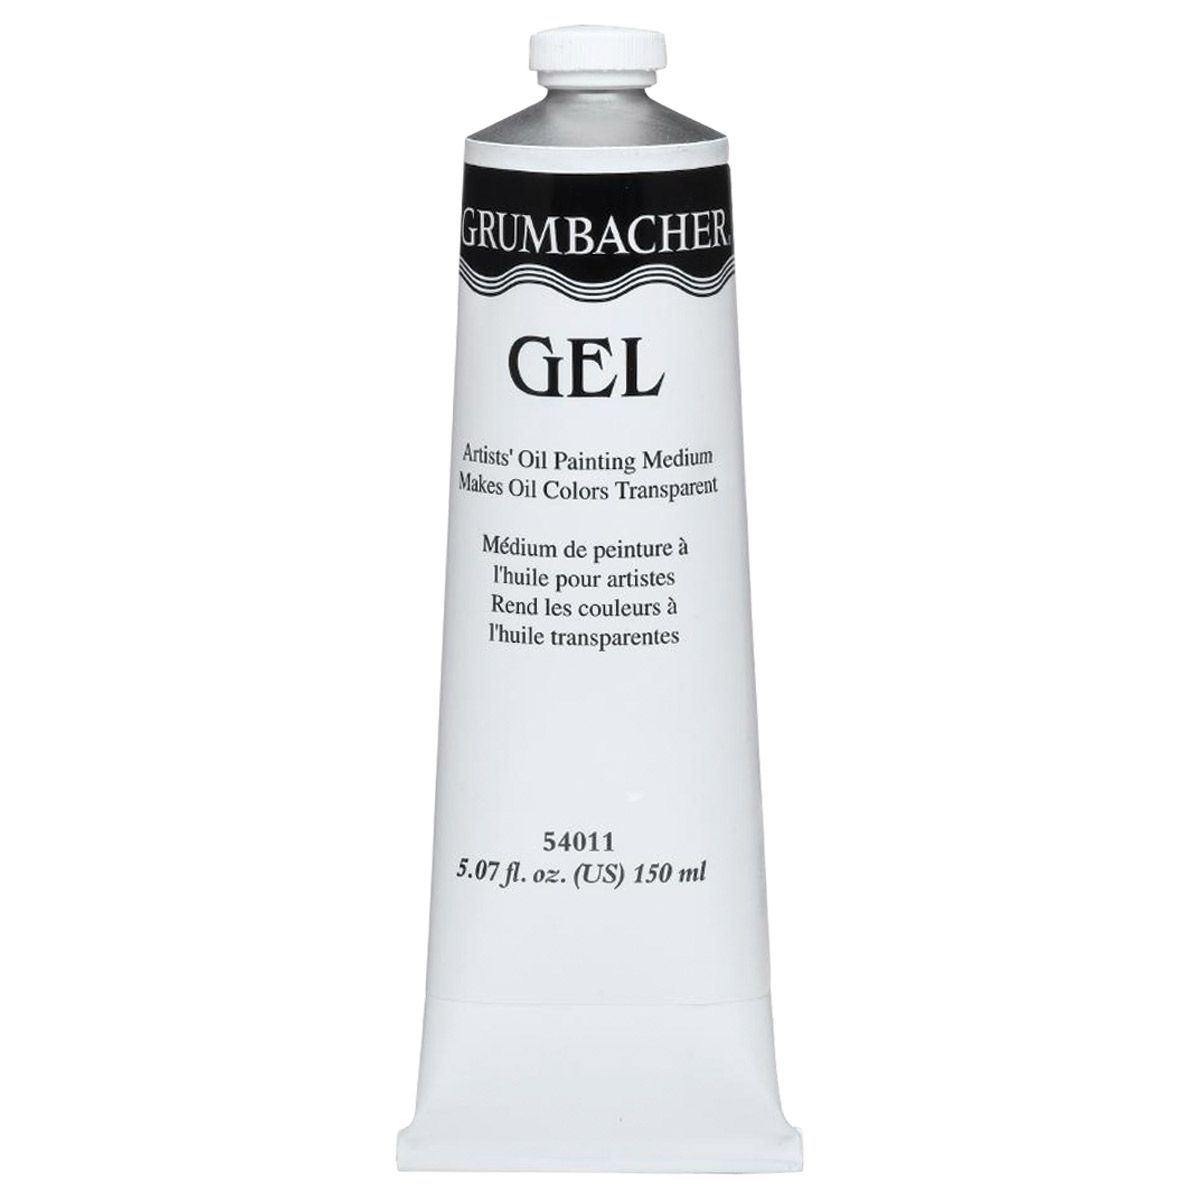 Grumbacher Pre-Tested Gel Transpantizer, 150 ml Tube